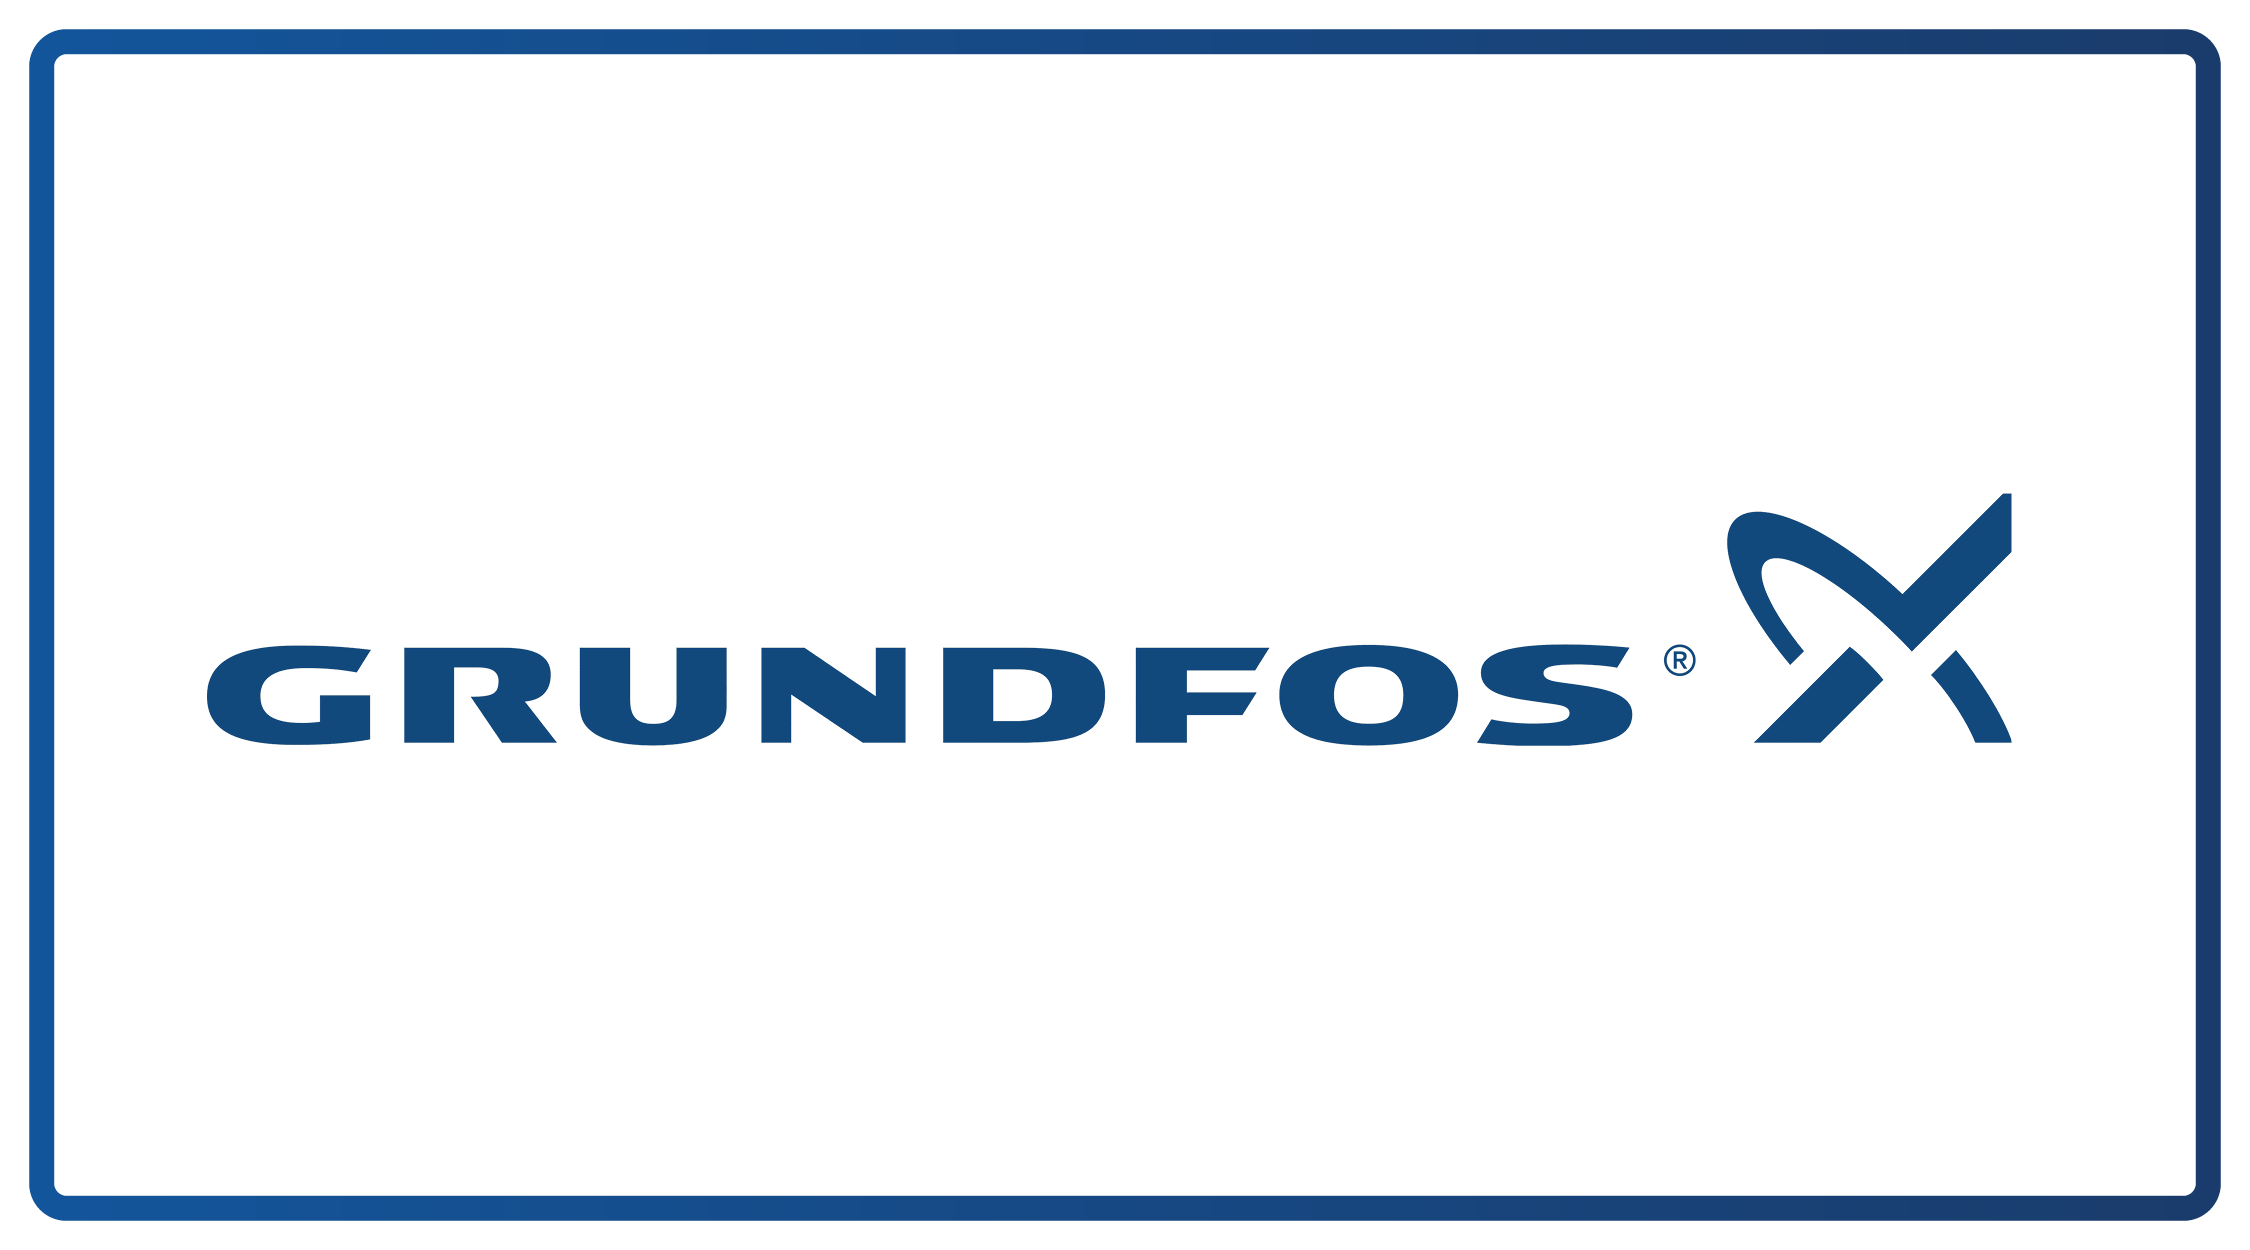 BTF24 Sponsor - GRUNDFOS